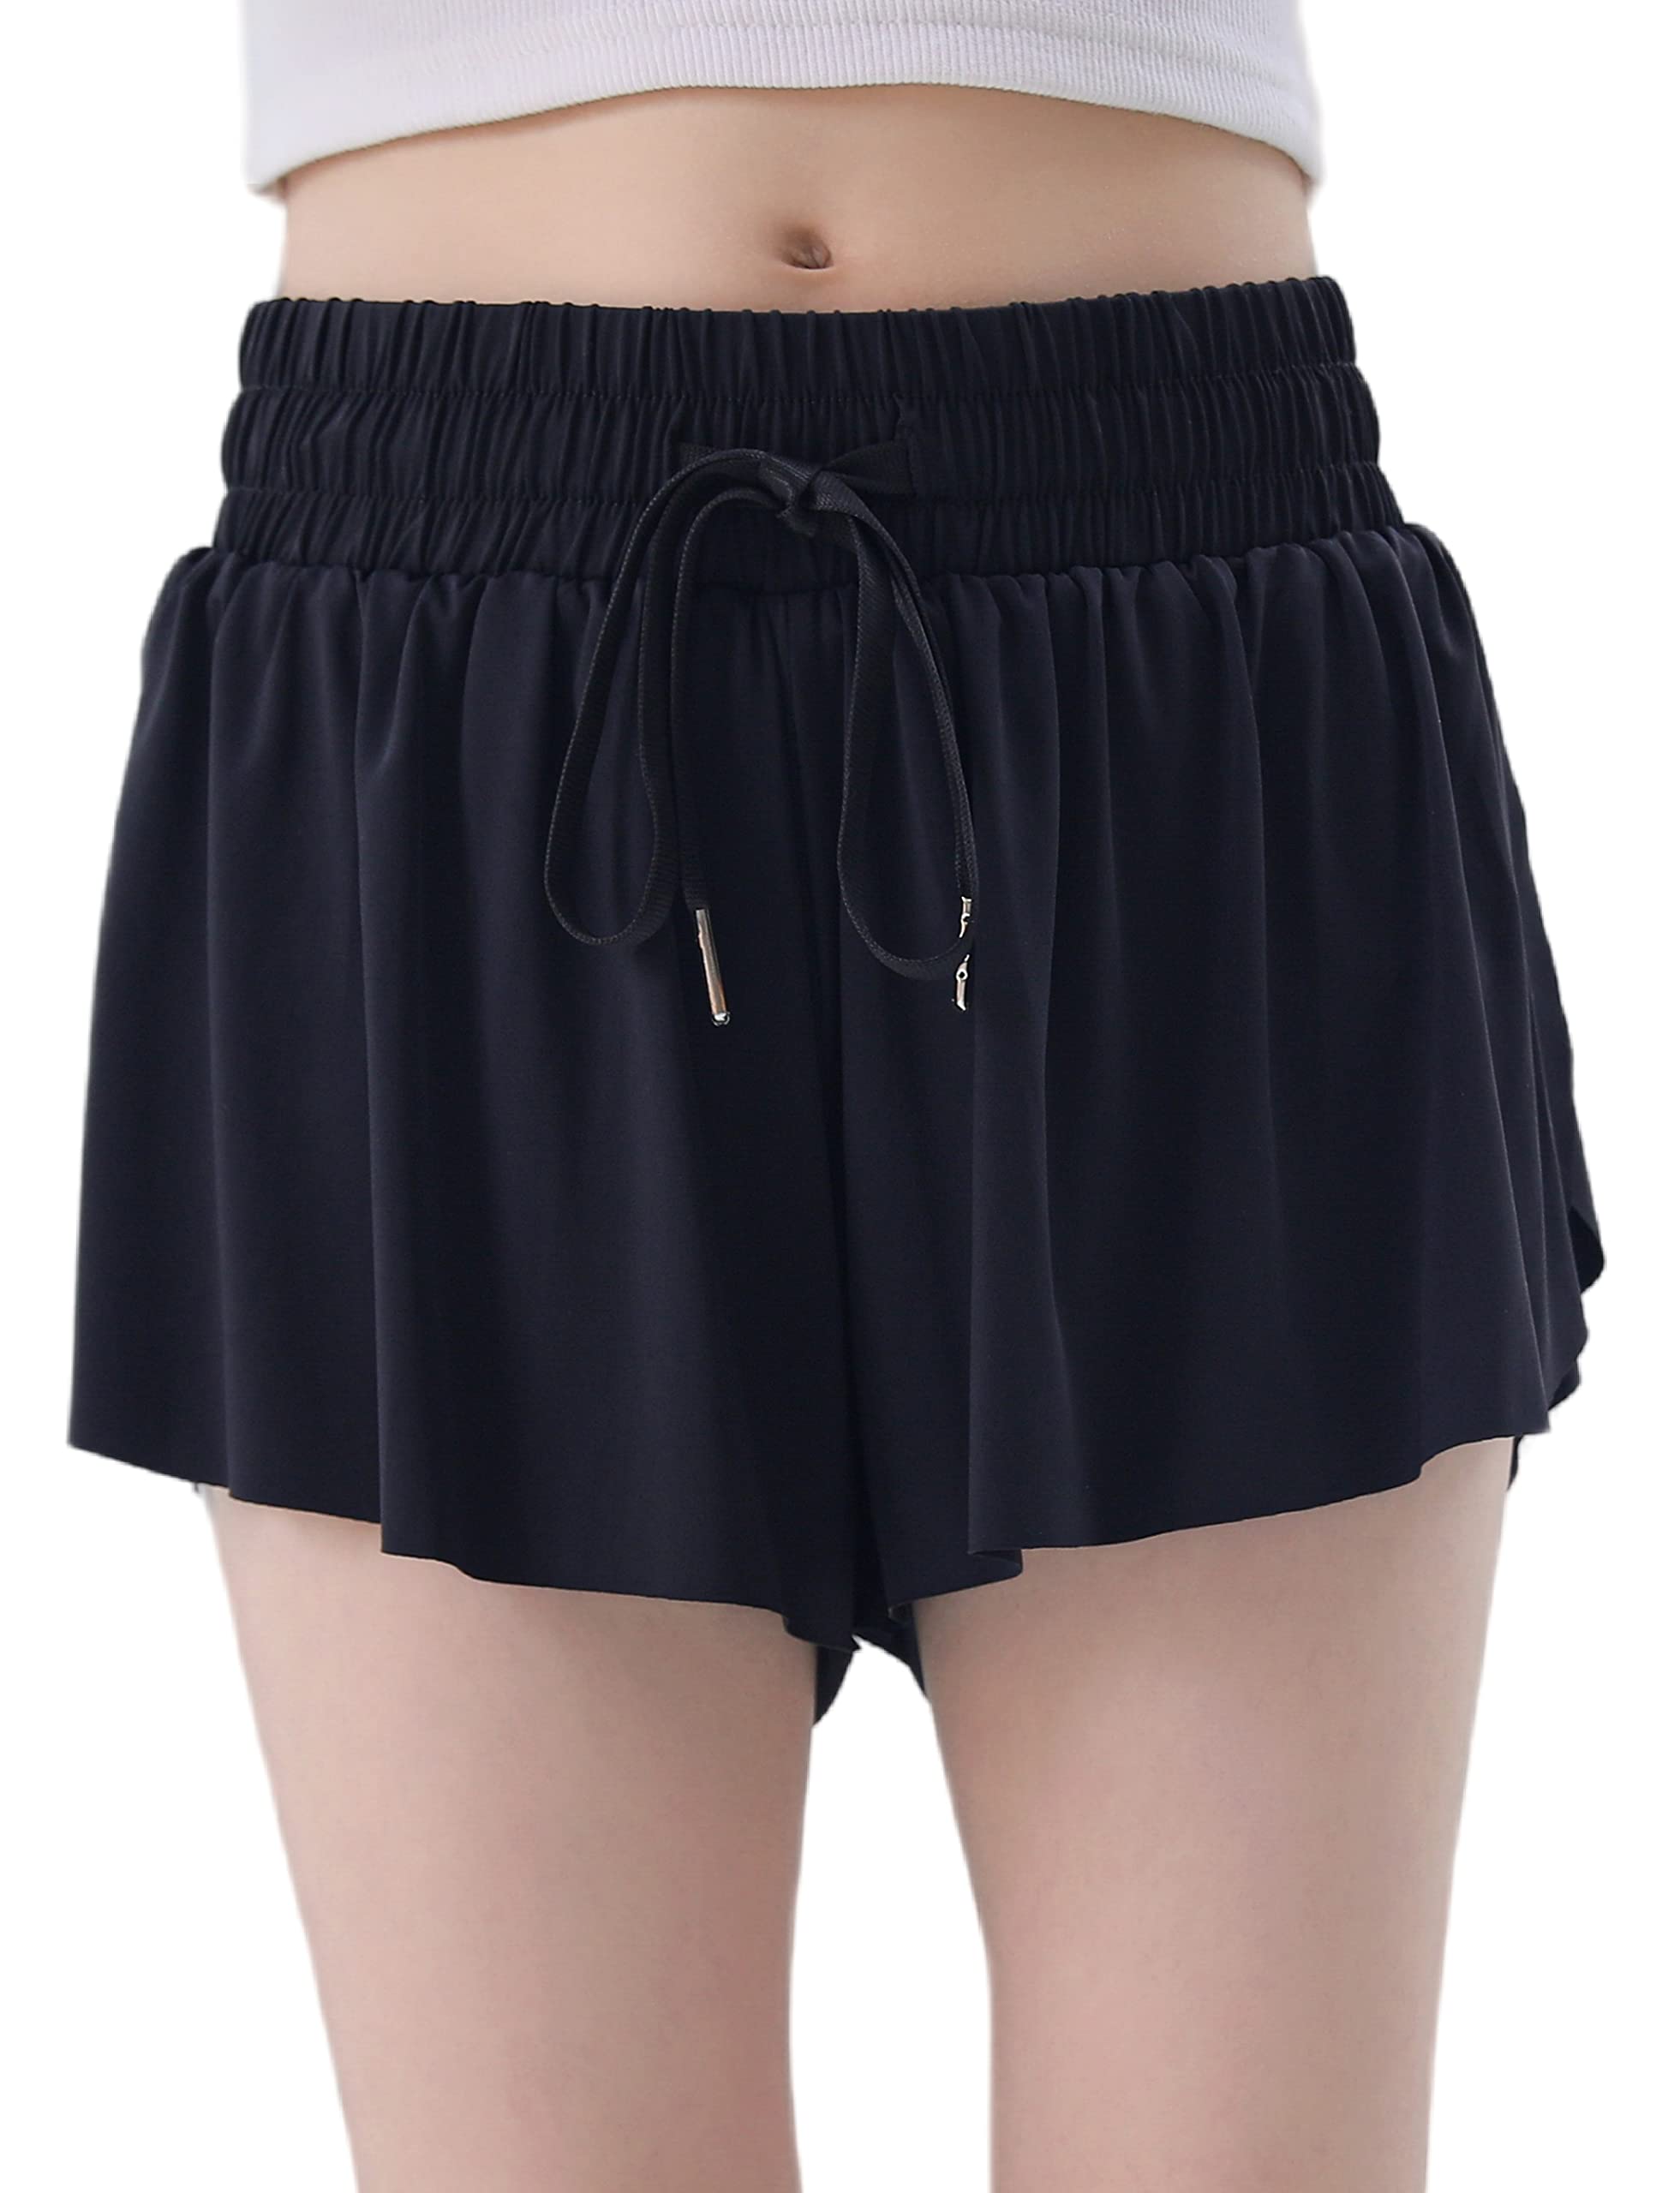 Cute Girls Athletic Shorts & Skorts